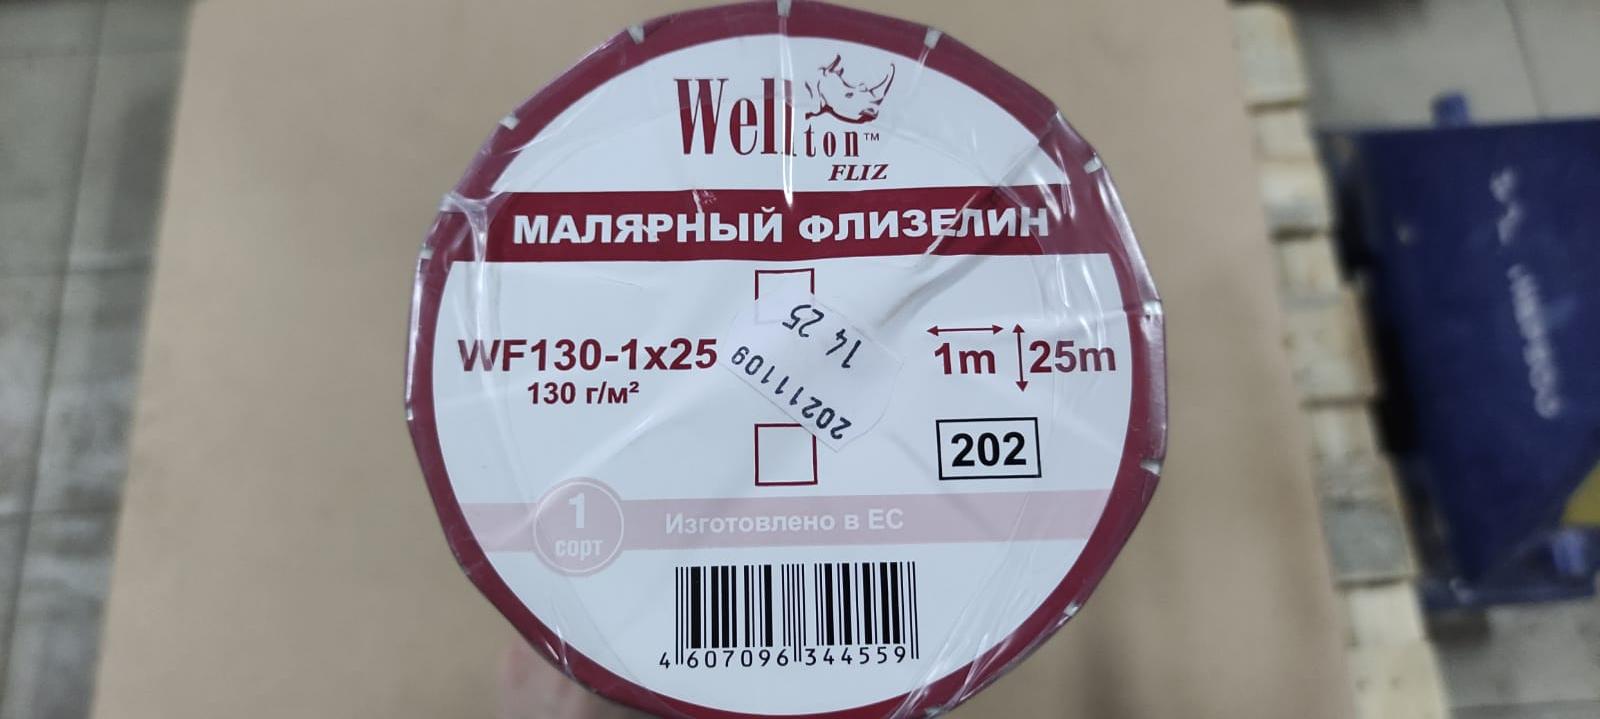 Малярный флизелин под покраску WF130 1 х 25 м Wellton Fliz								